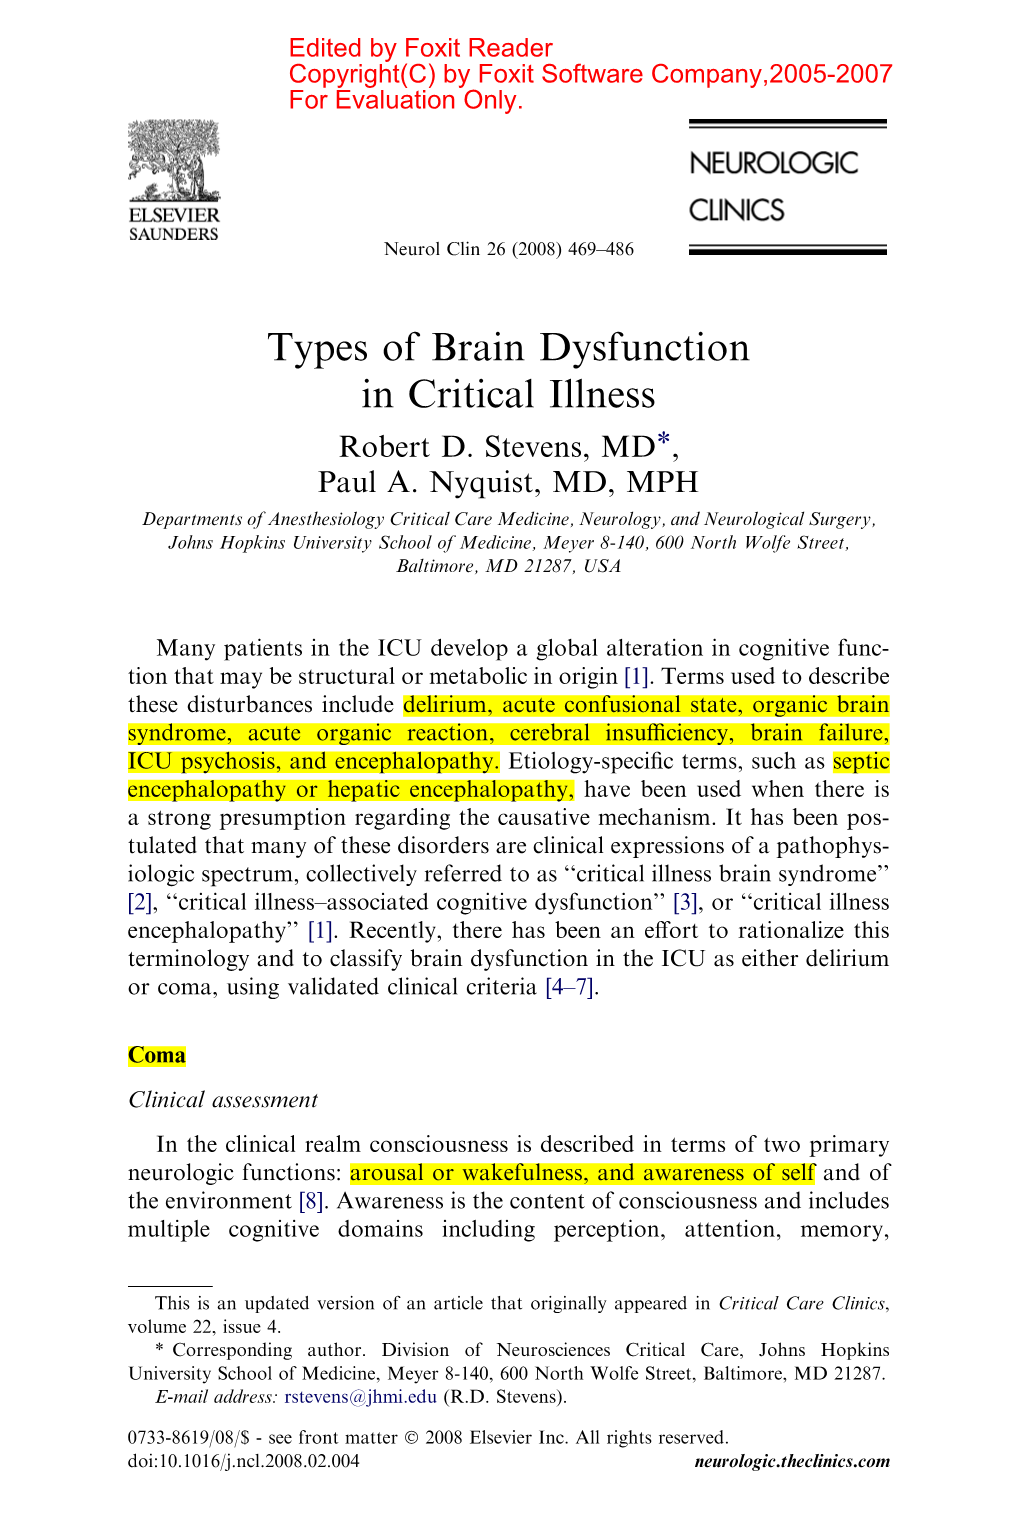 Types of Brain Dysfunction in Critical Illness Robert D